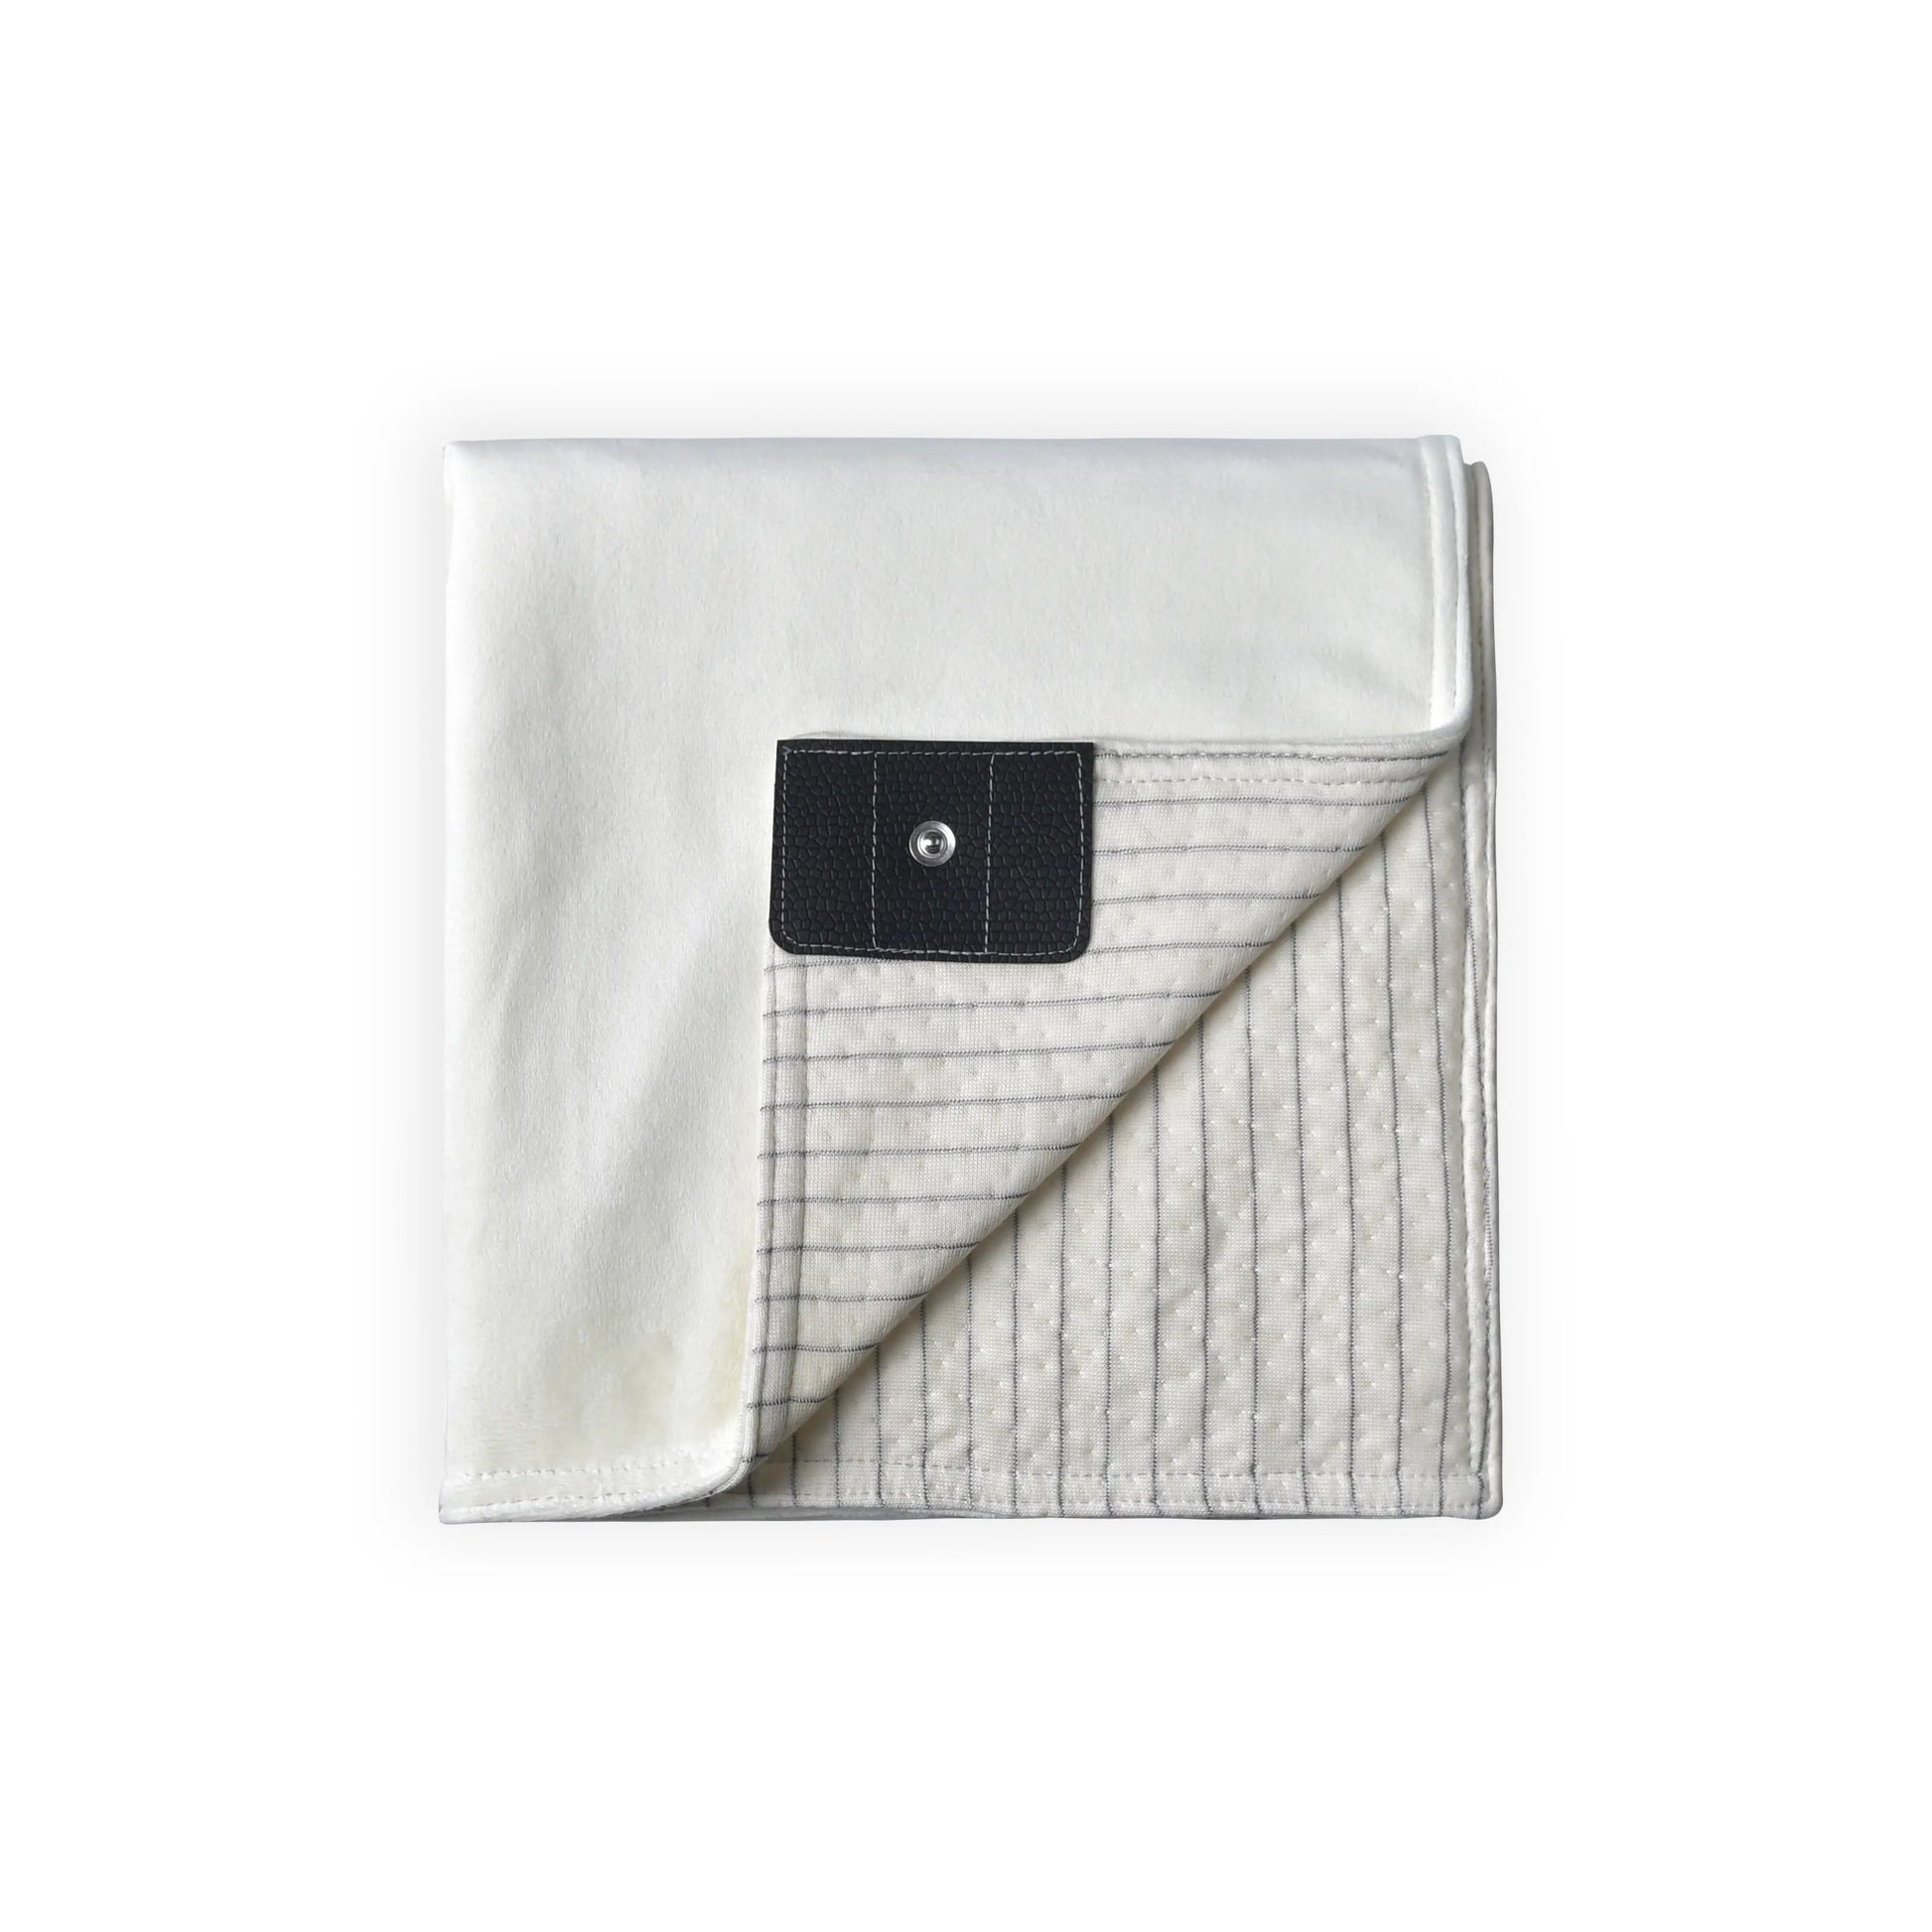 Earthing blanket - Soft and versatile 50cm X 70cm - GroundedKiwi.nz